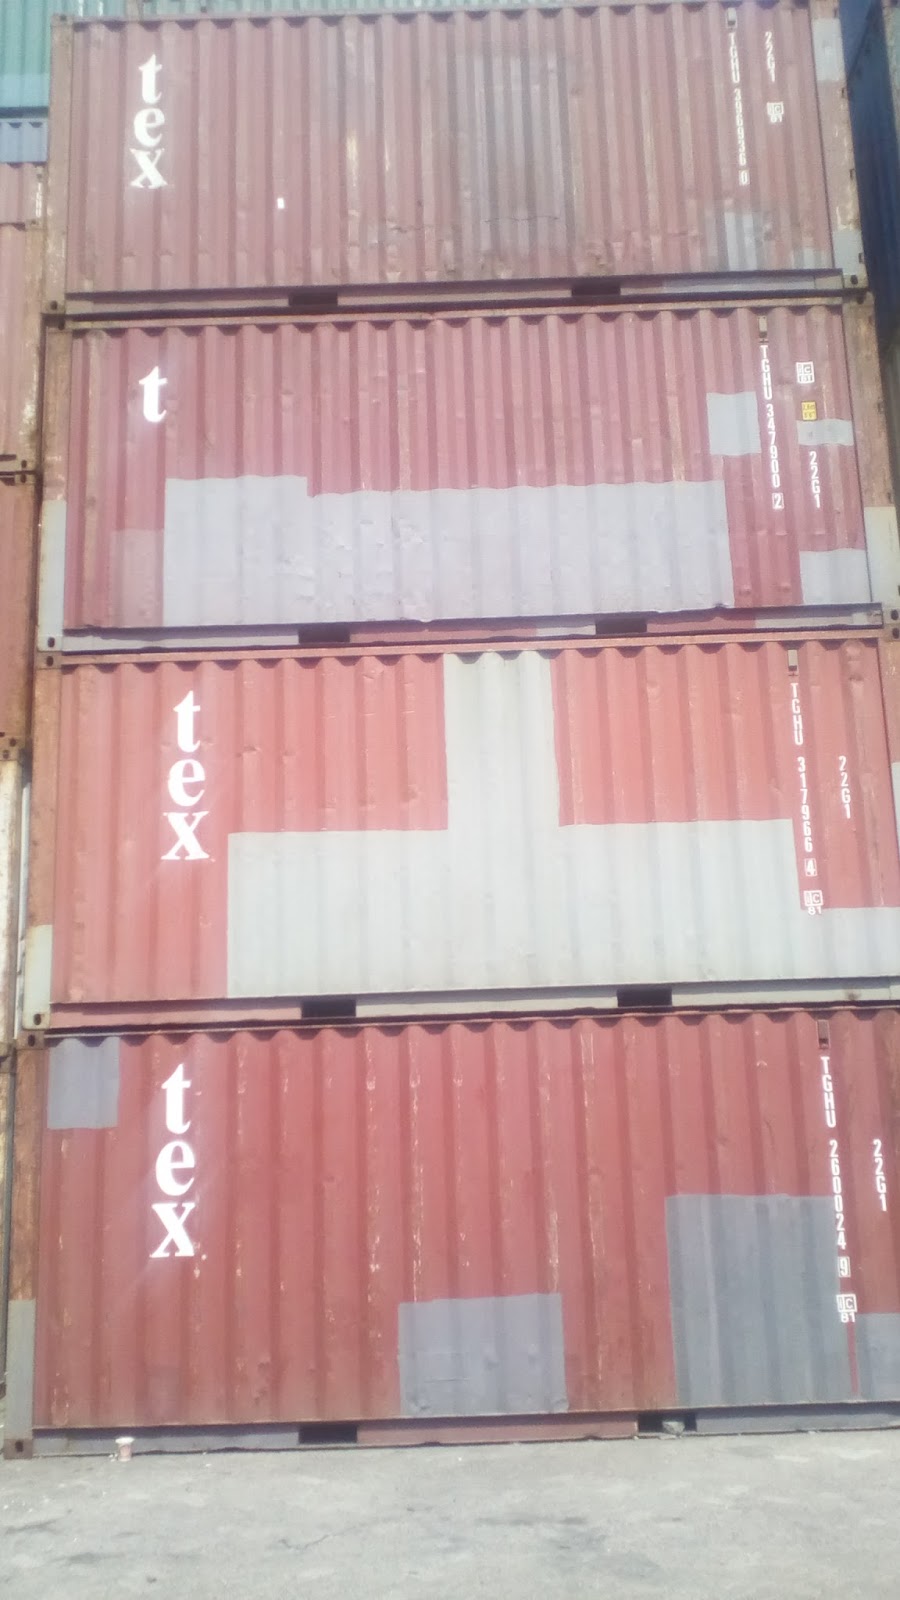 Harga container bekas 20 feet - Harga Container, Jual 